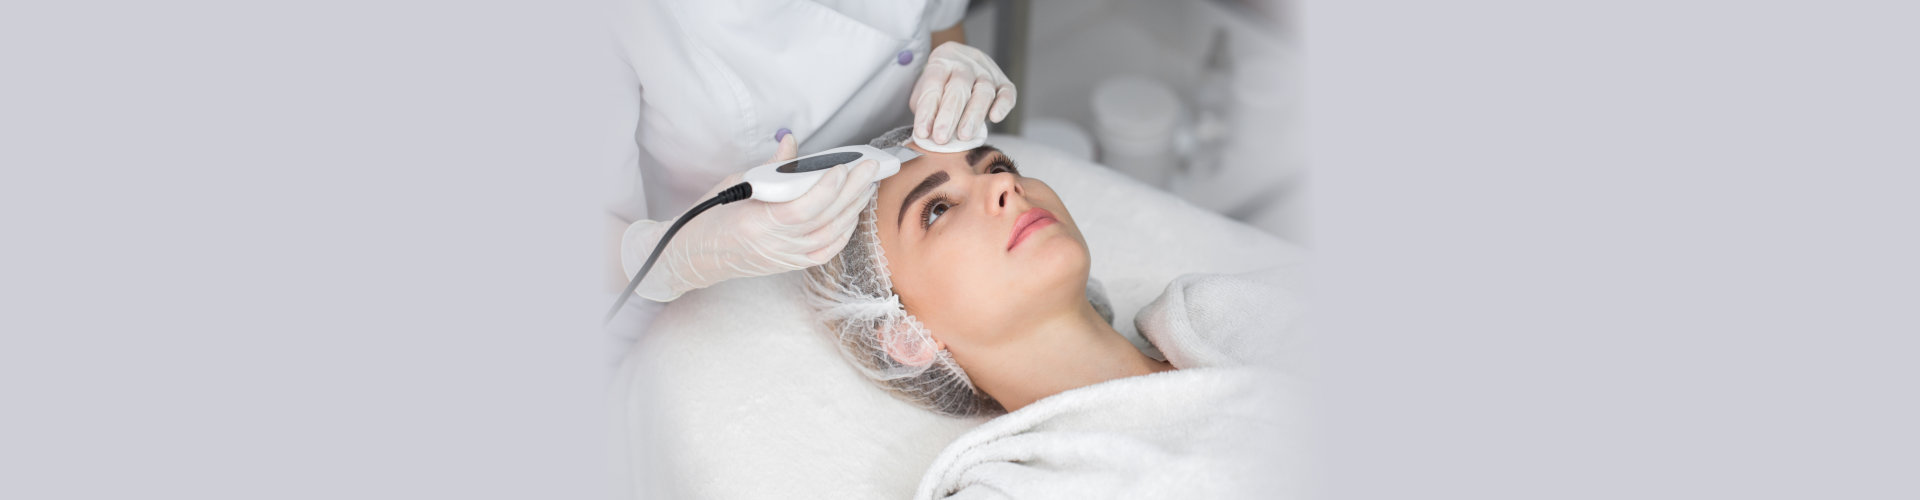 beautiful woman receiving ultrasound favitation facial peeling